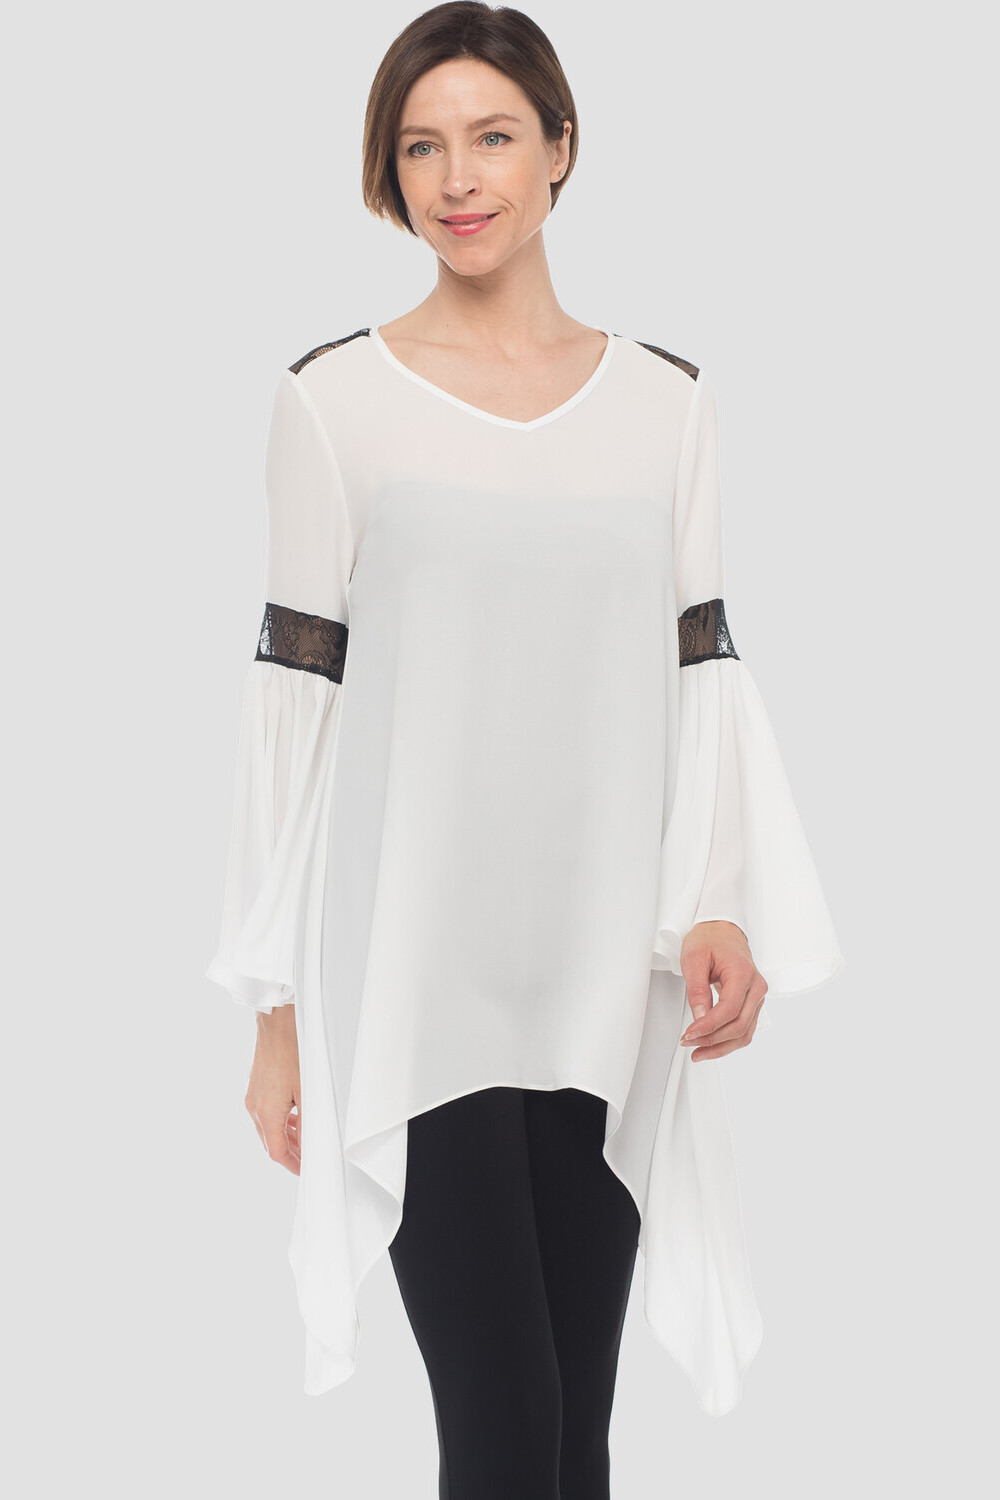 Joseph Ribkoff tunic style 183495. Off-white/black